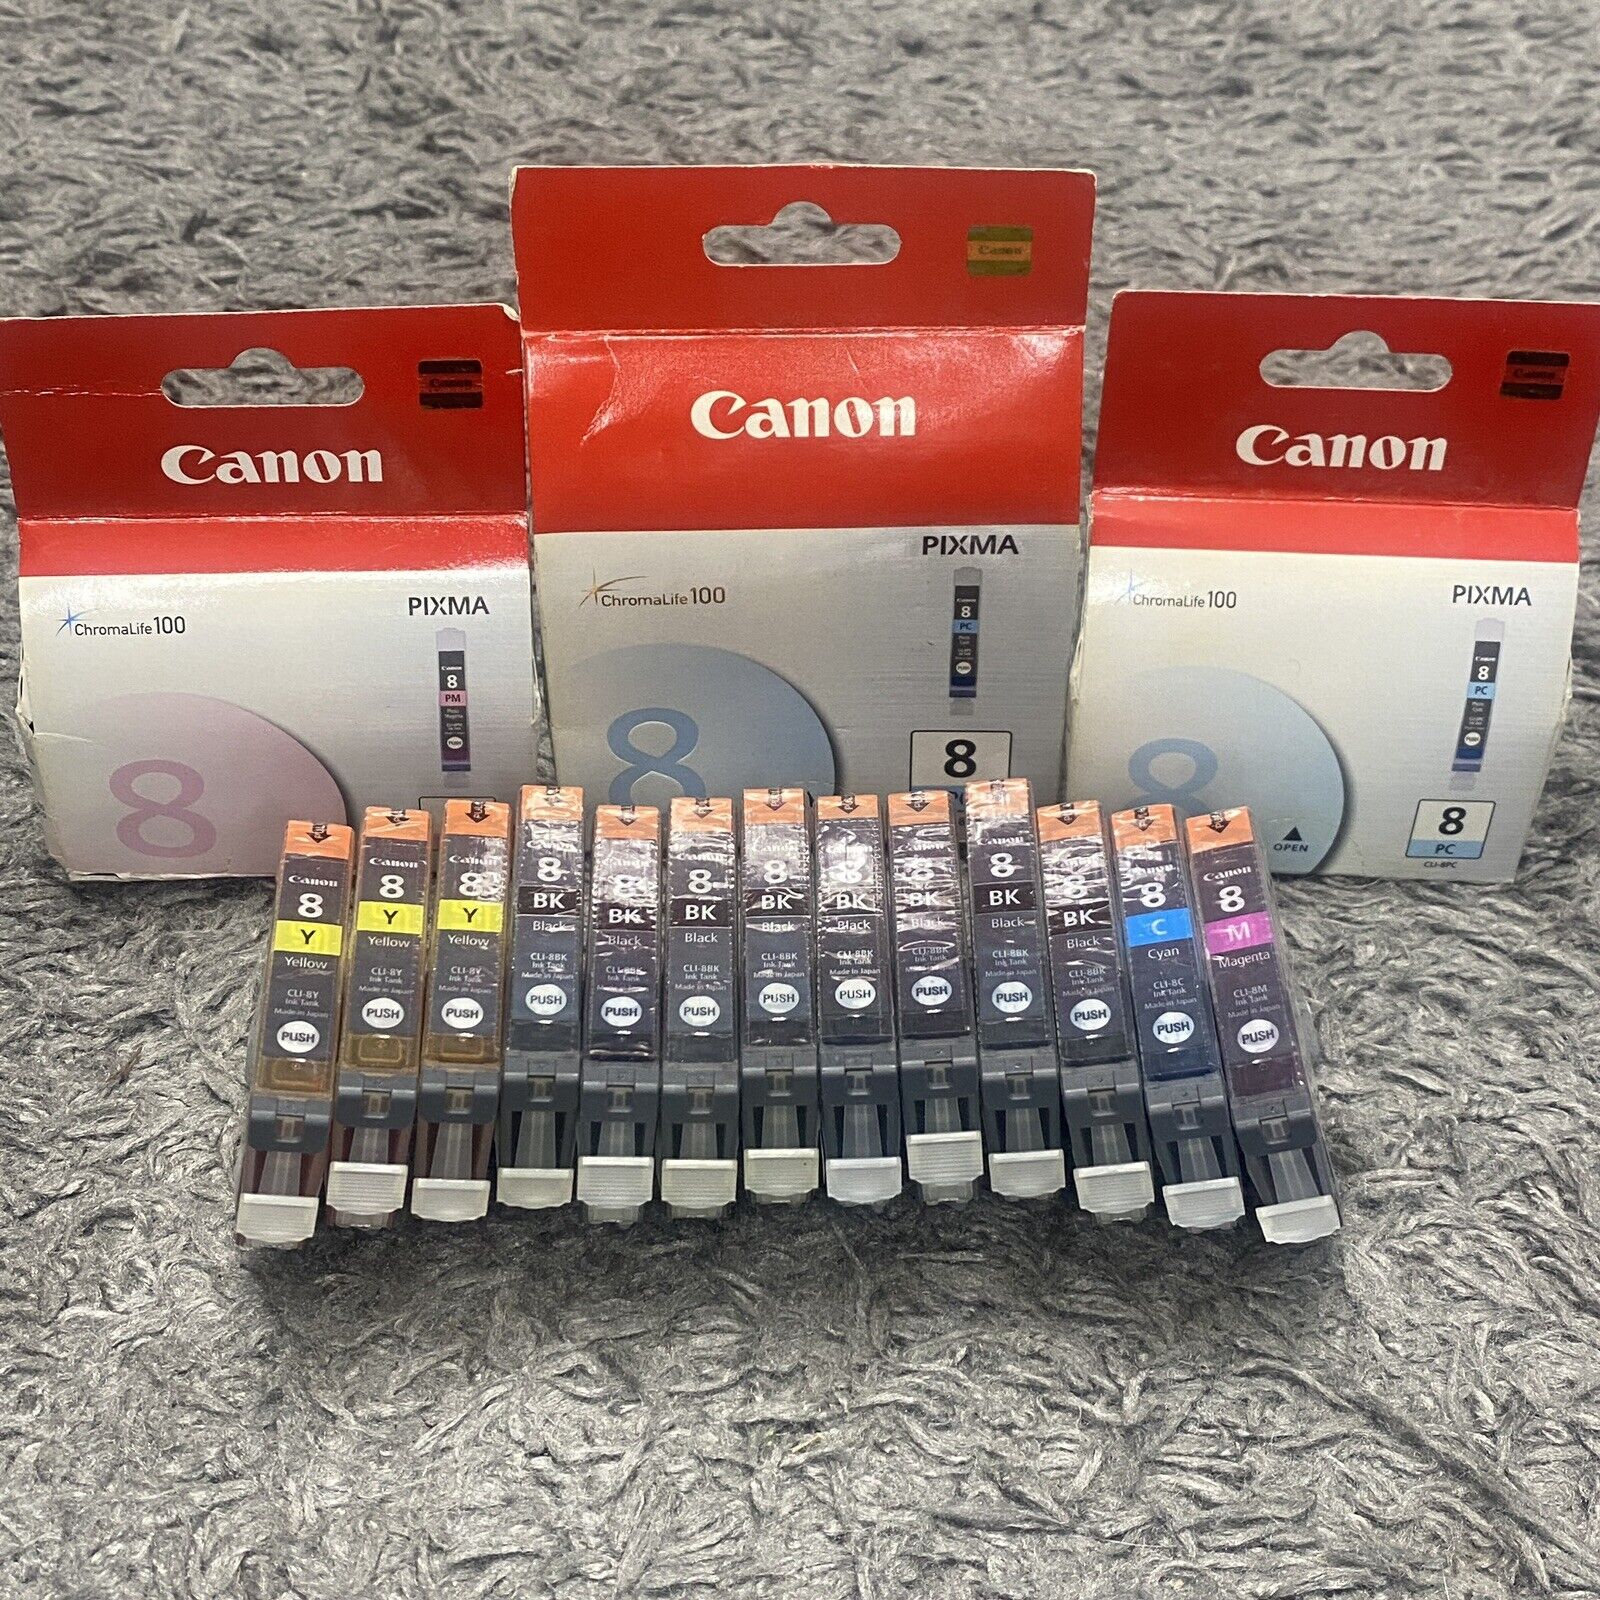 Canon Pixma Ink Cartridge Lot CLI-8 Y Yellow BK Black C Cyan PM Photo M Magenta